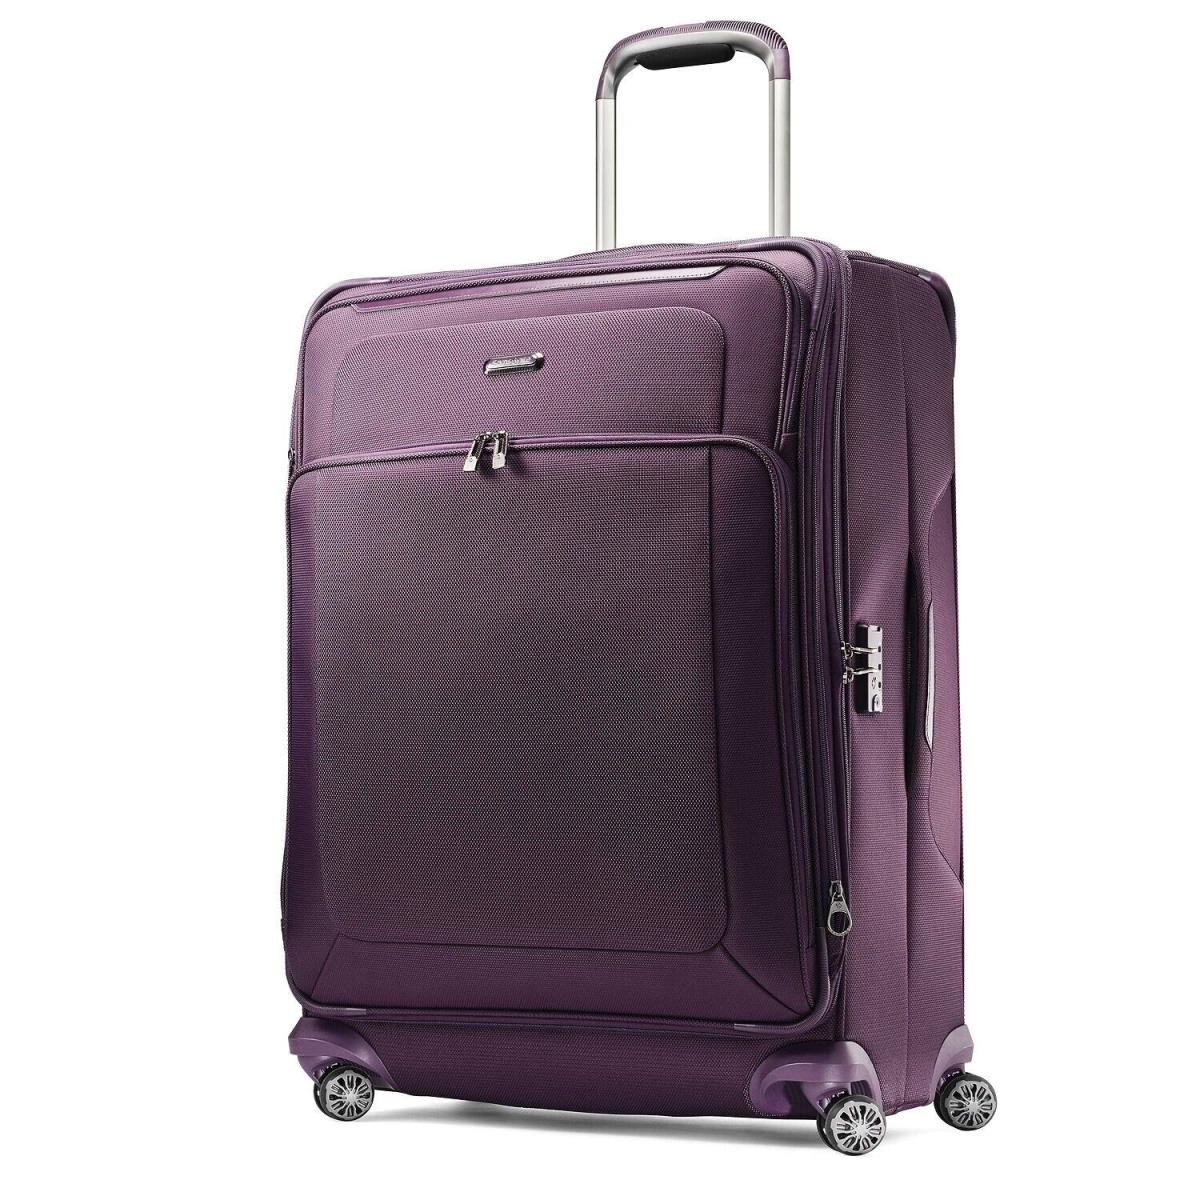 Samsonite 249590 Profile Plus 29 Inch Spinner Luggage Blackberry Suitcase